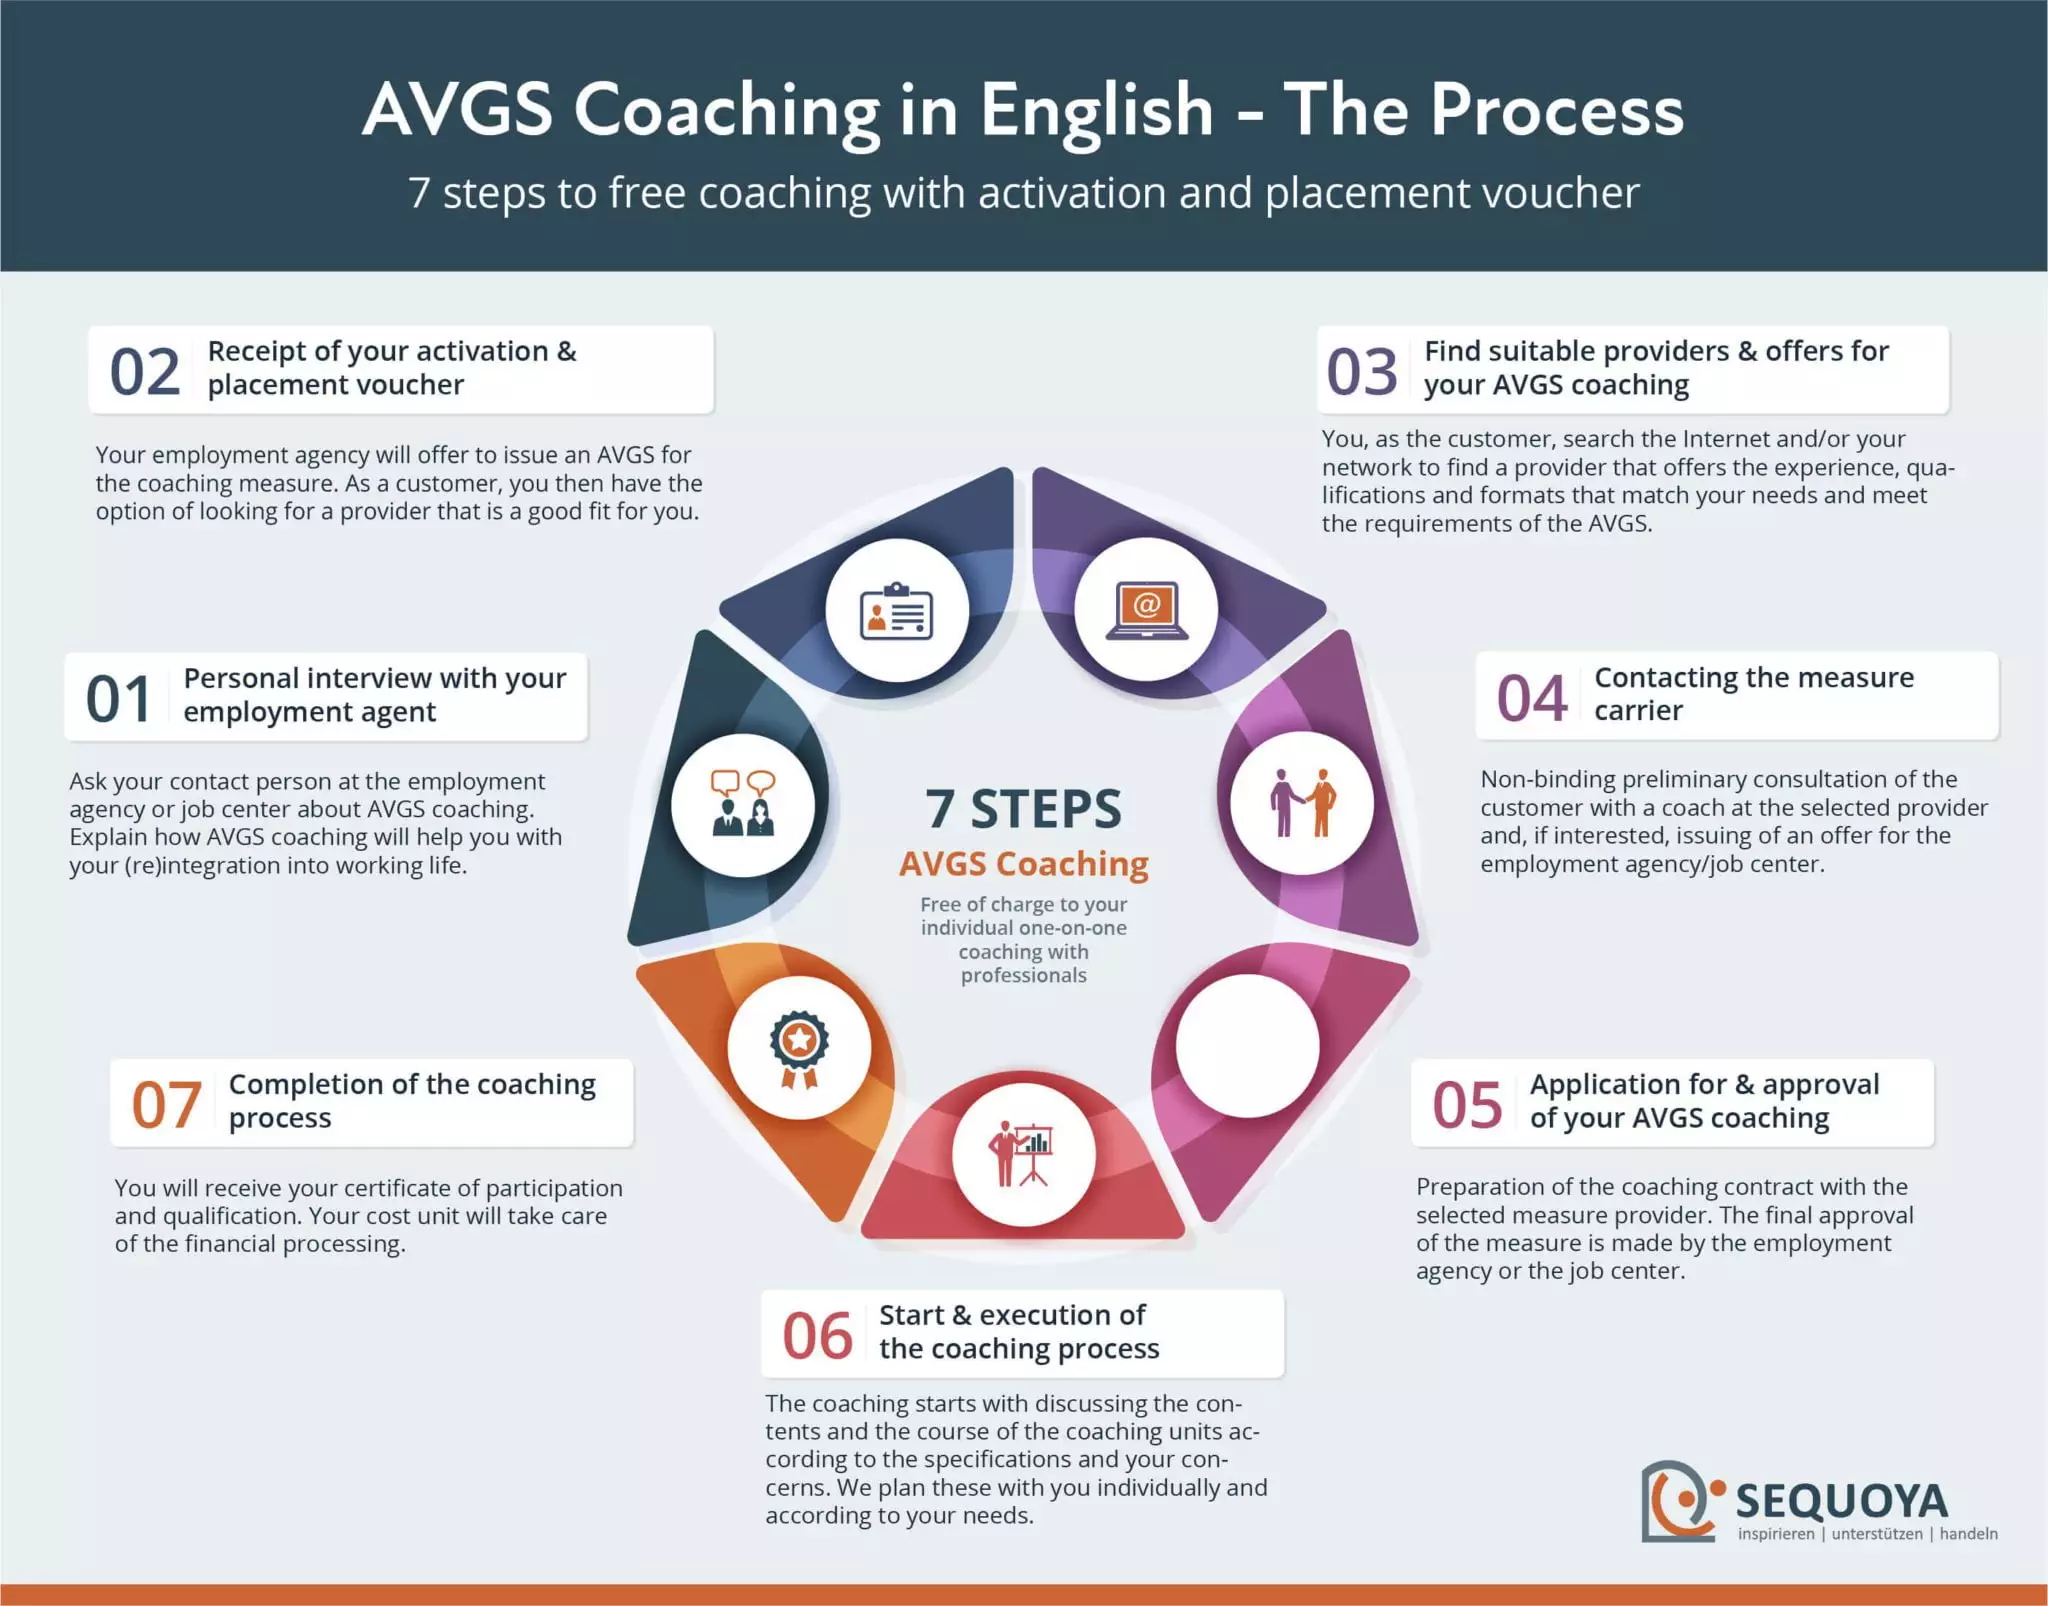 AVGS-Coaching Process (7 steps)